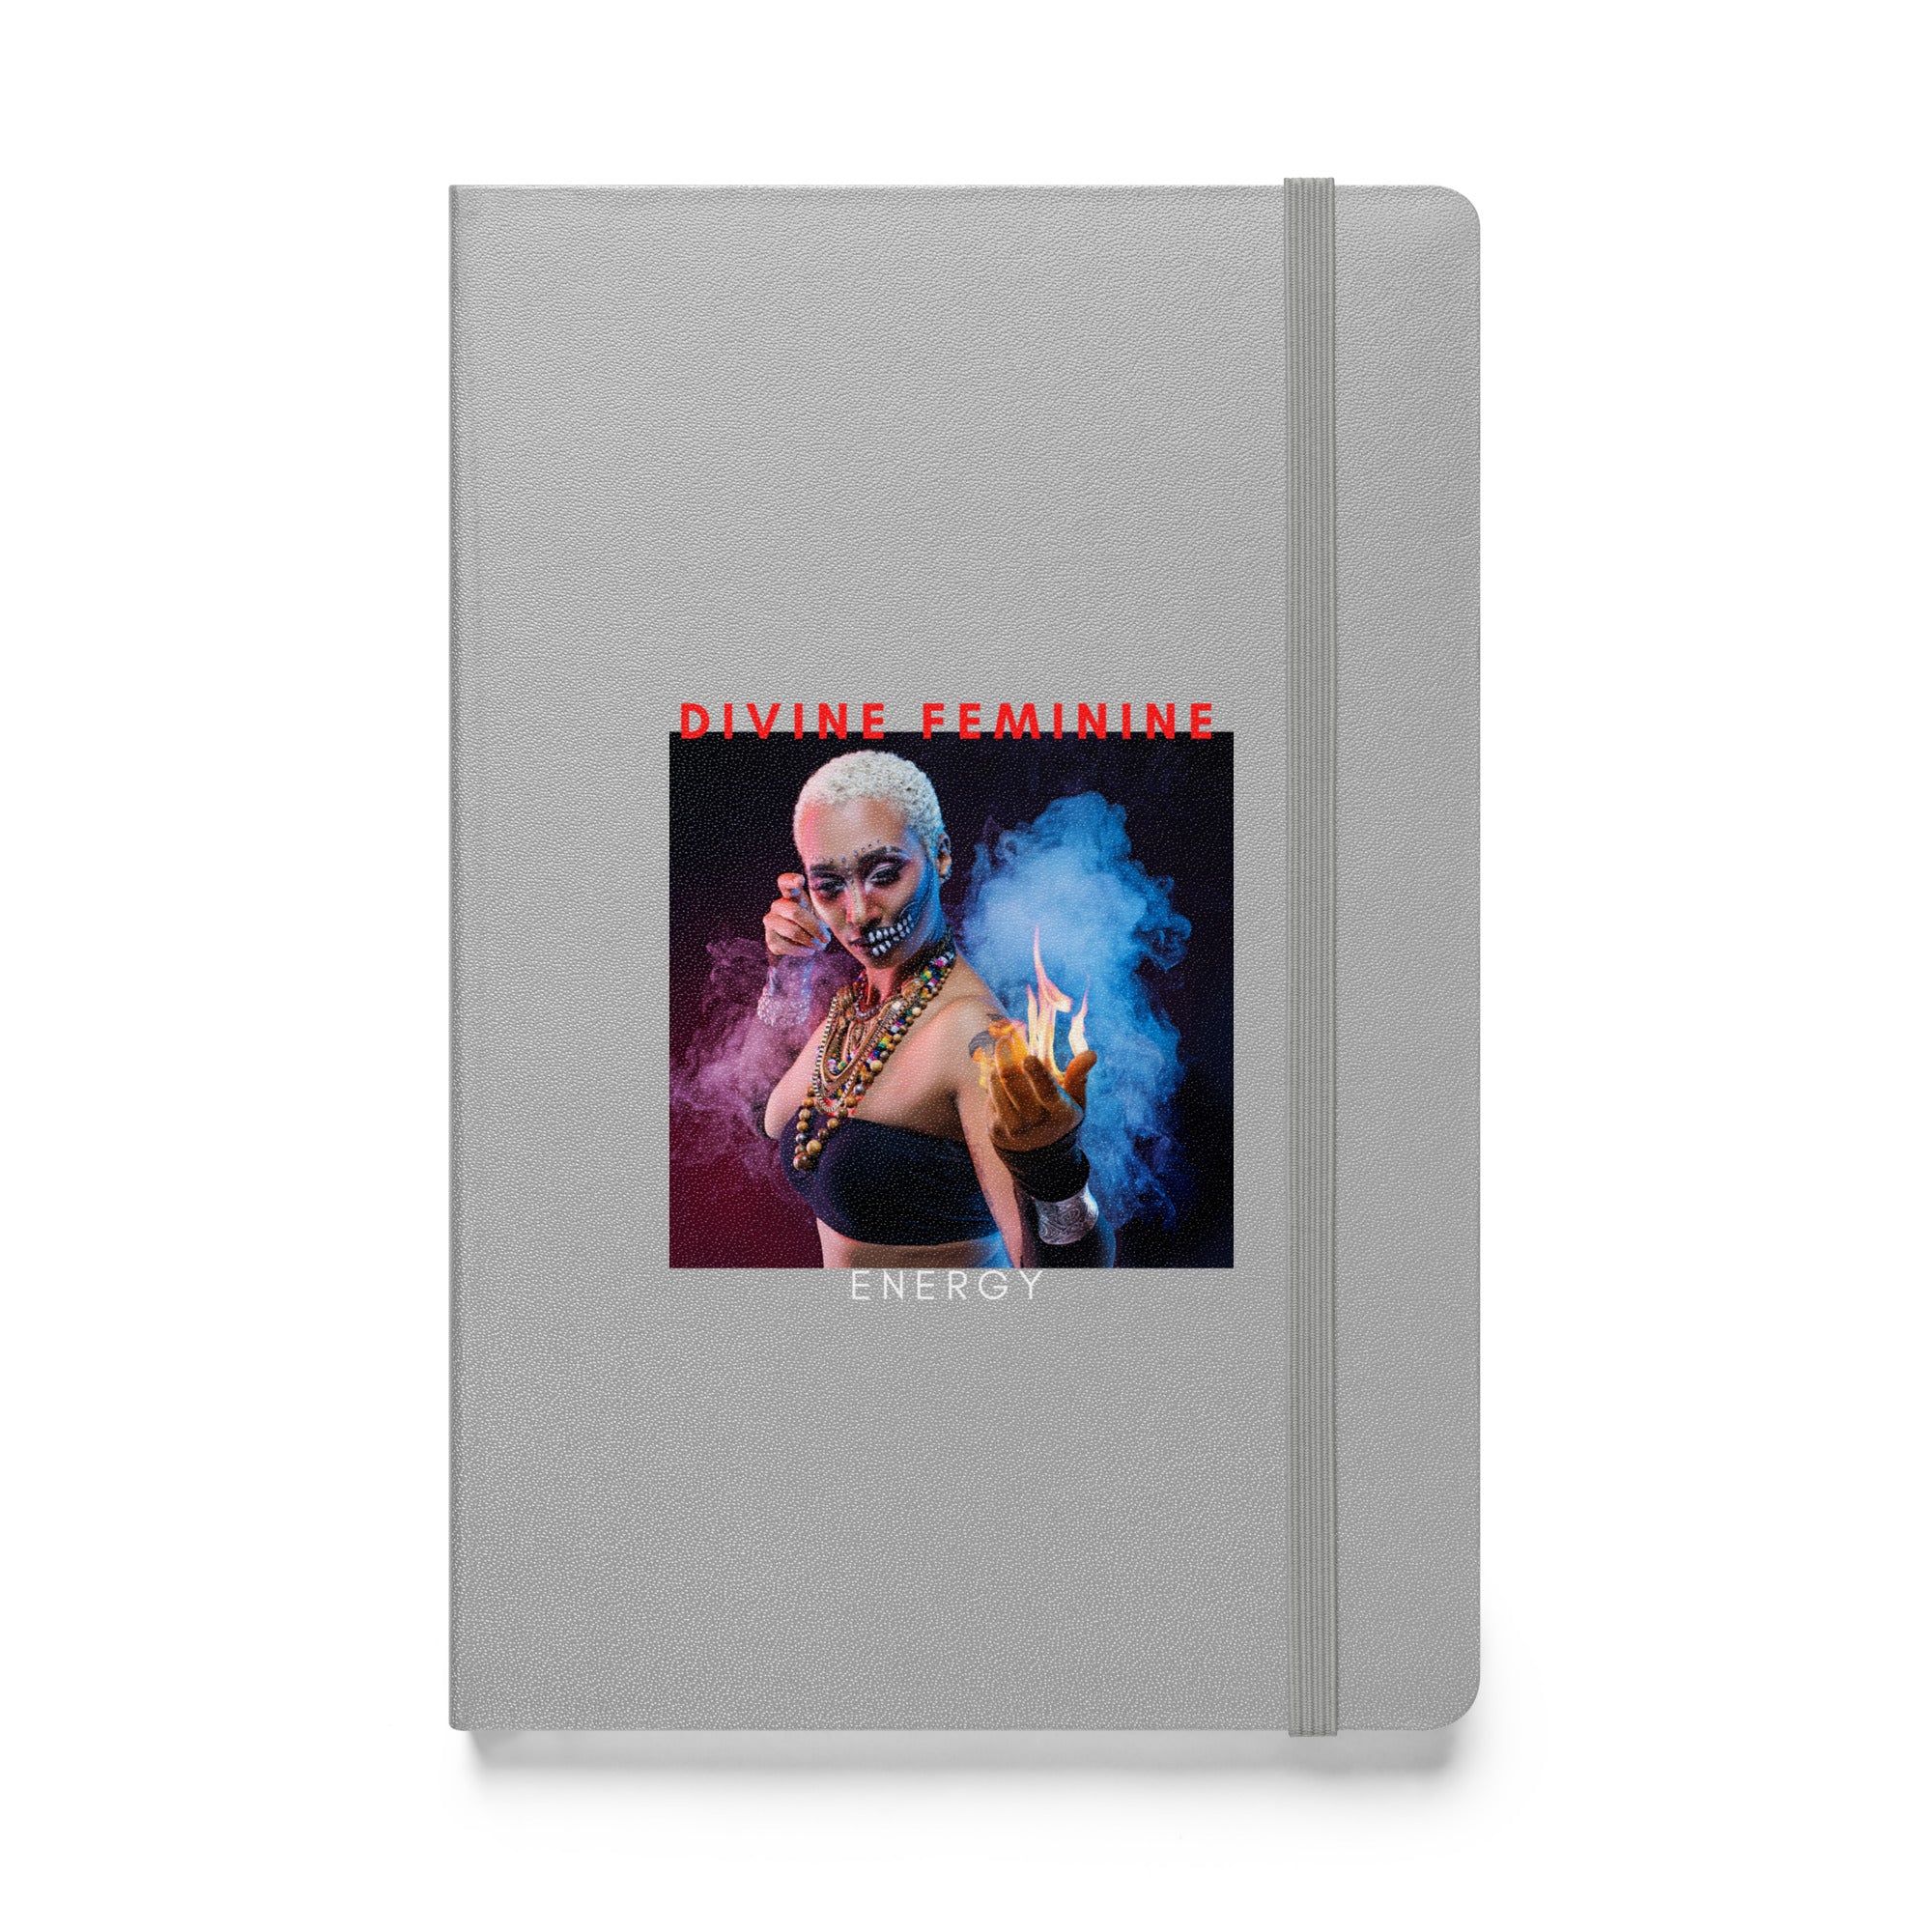 Divine Feminine Energy Hardcover bound notebook